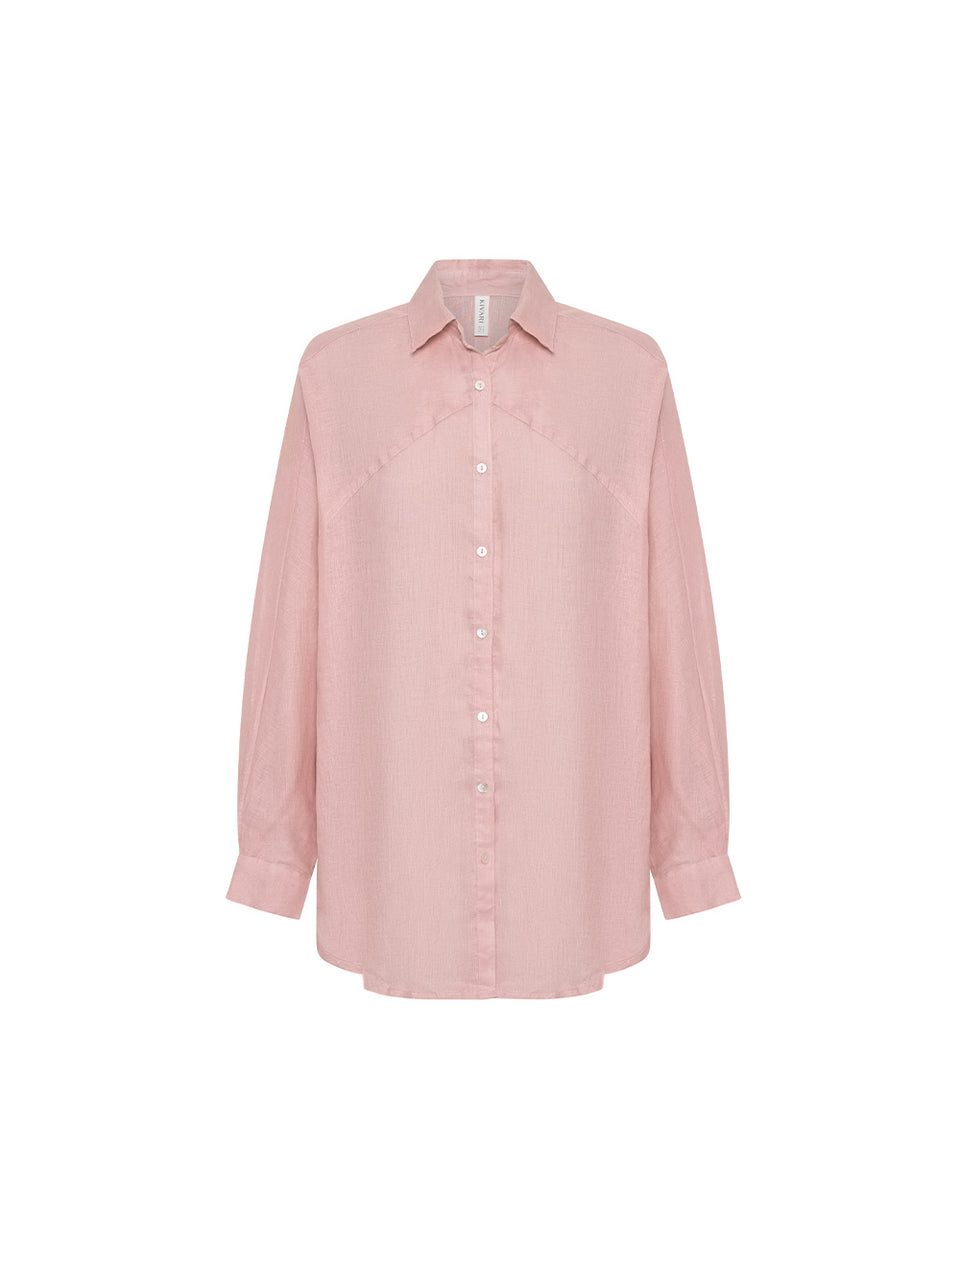 KIVARI Nikita Shirt | Dusty Pink Shirt